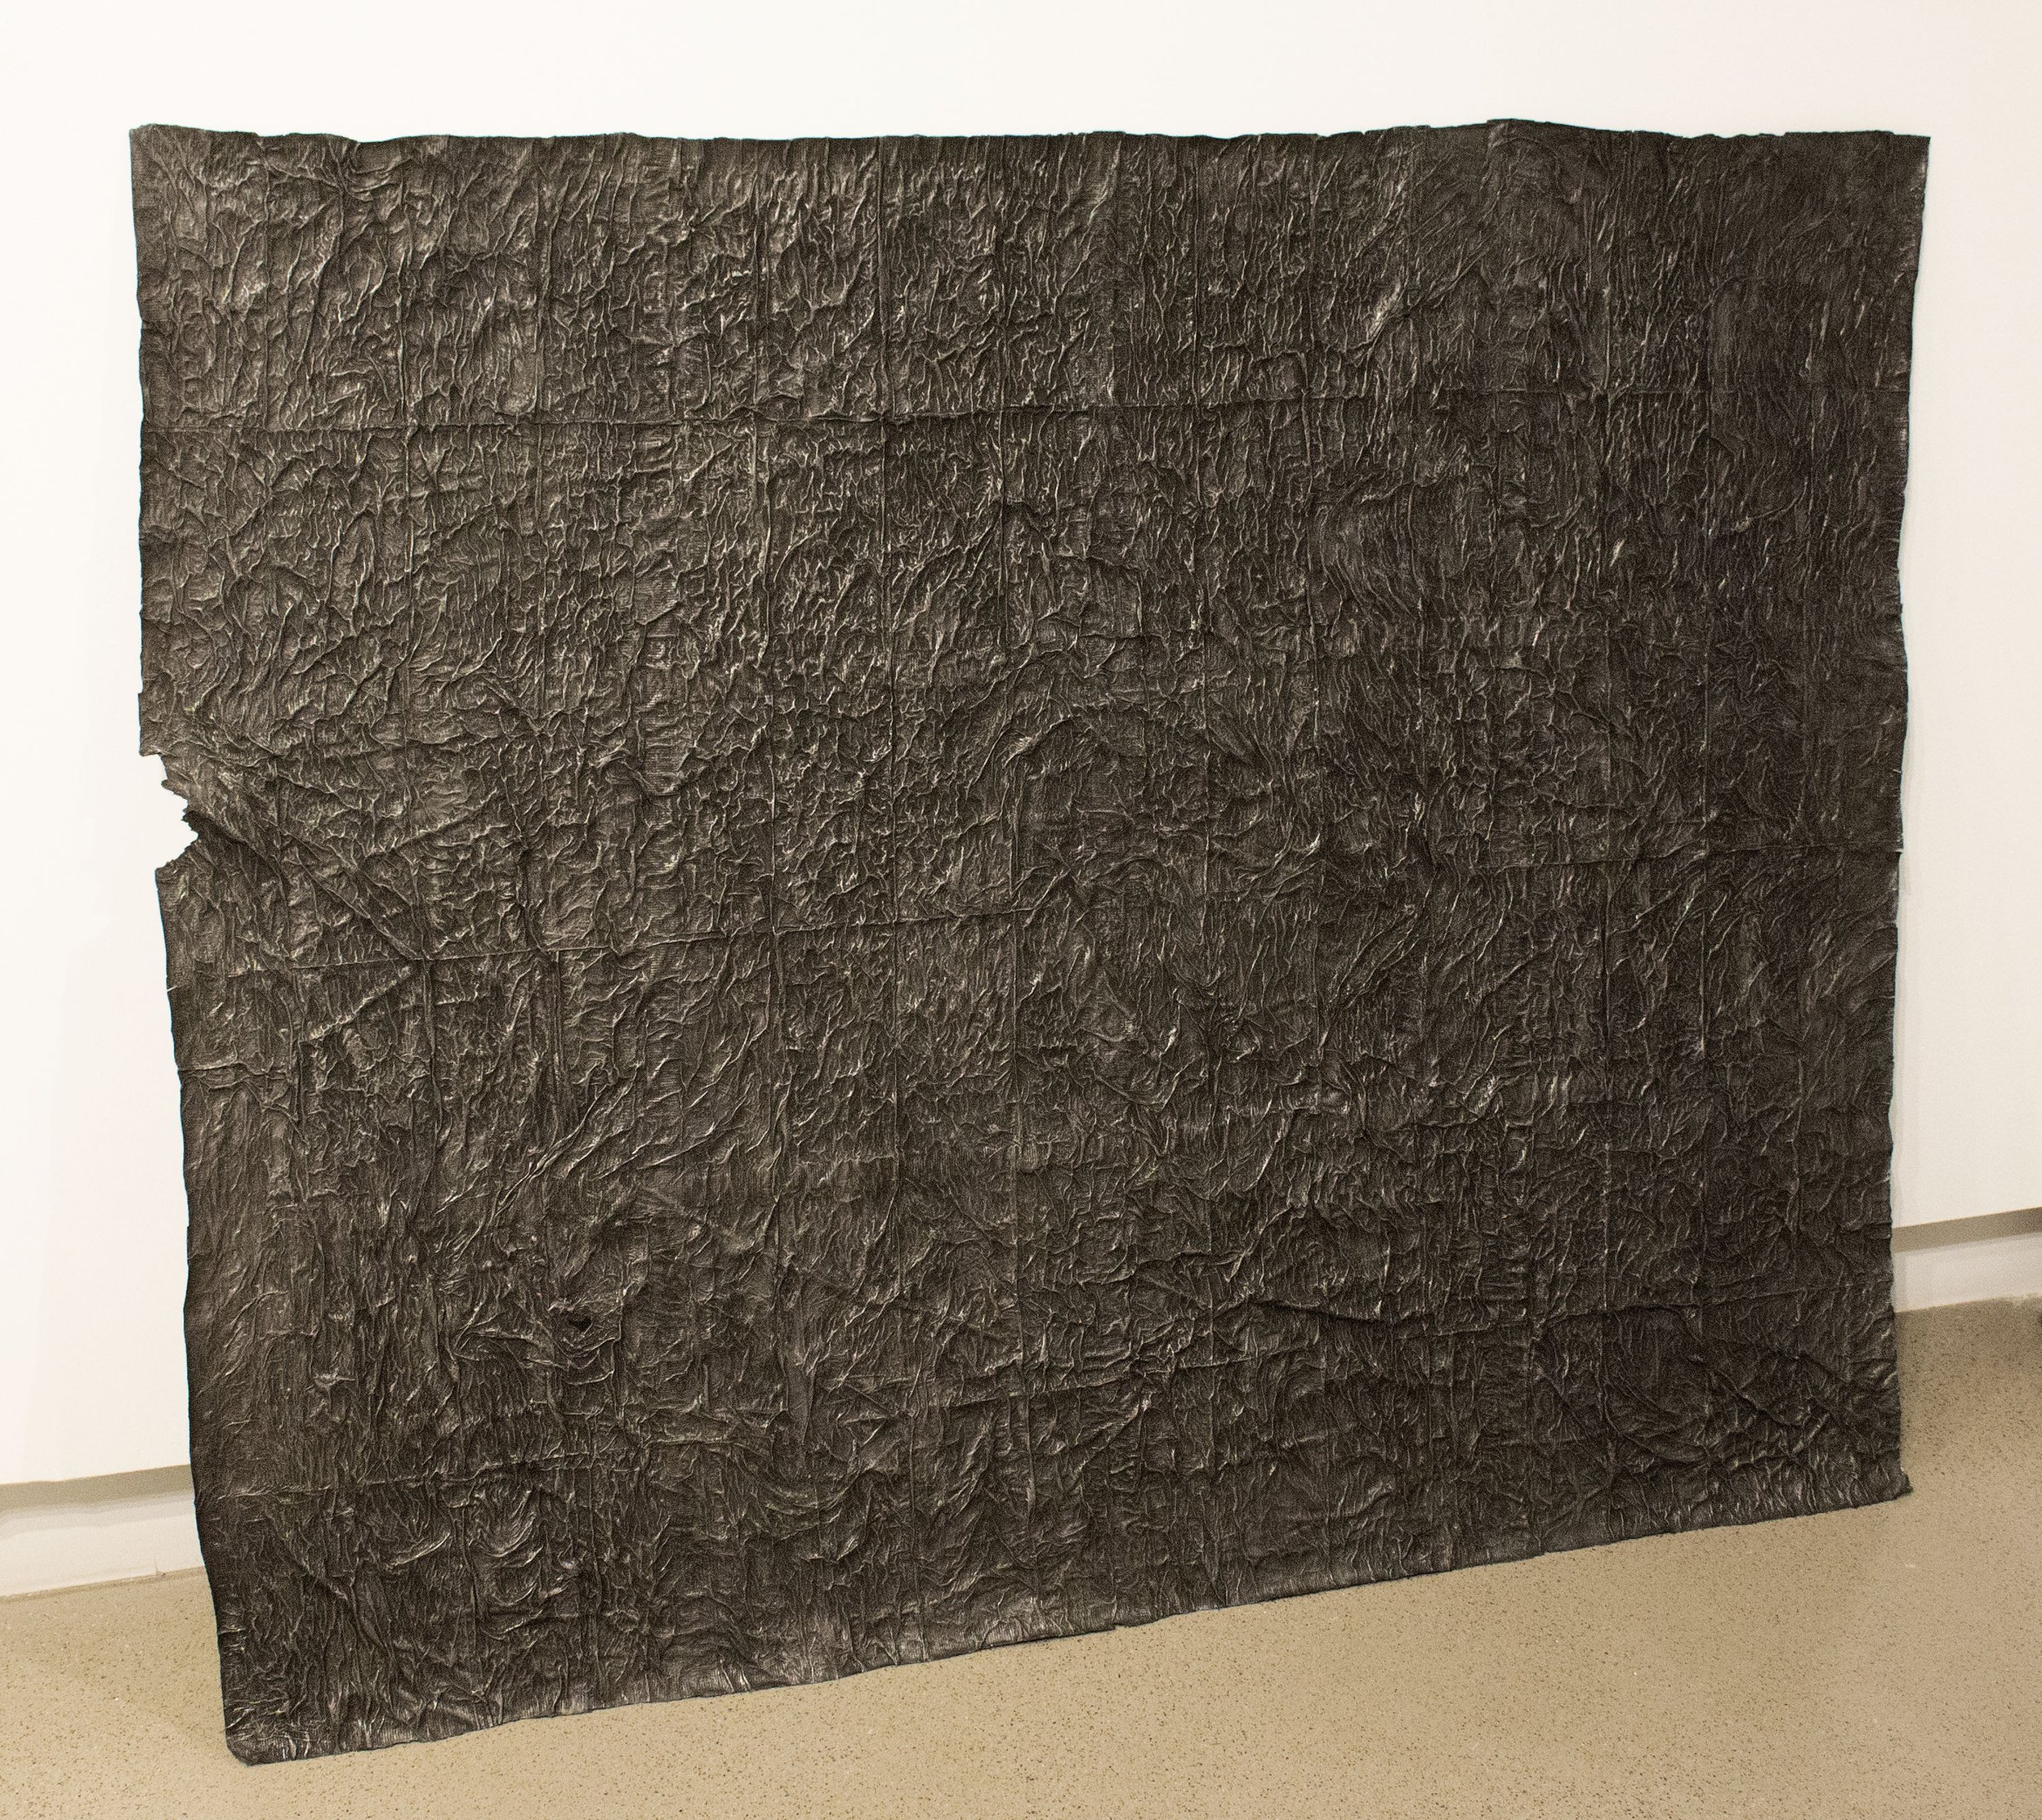    Untitled (Napkin sheet)     2022  Glue, flashe and graphite on tissue paper napkins   45 x 55 inches  